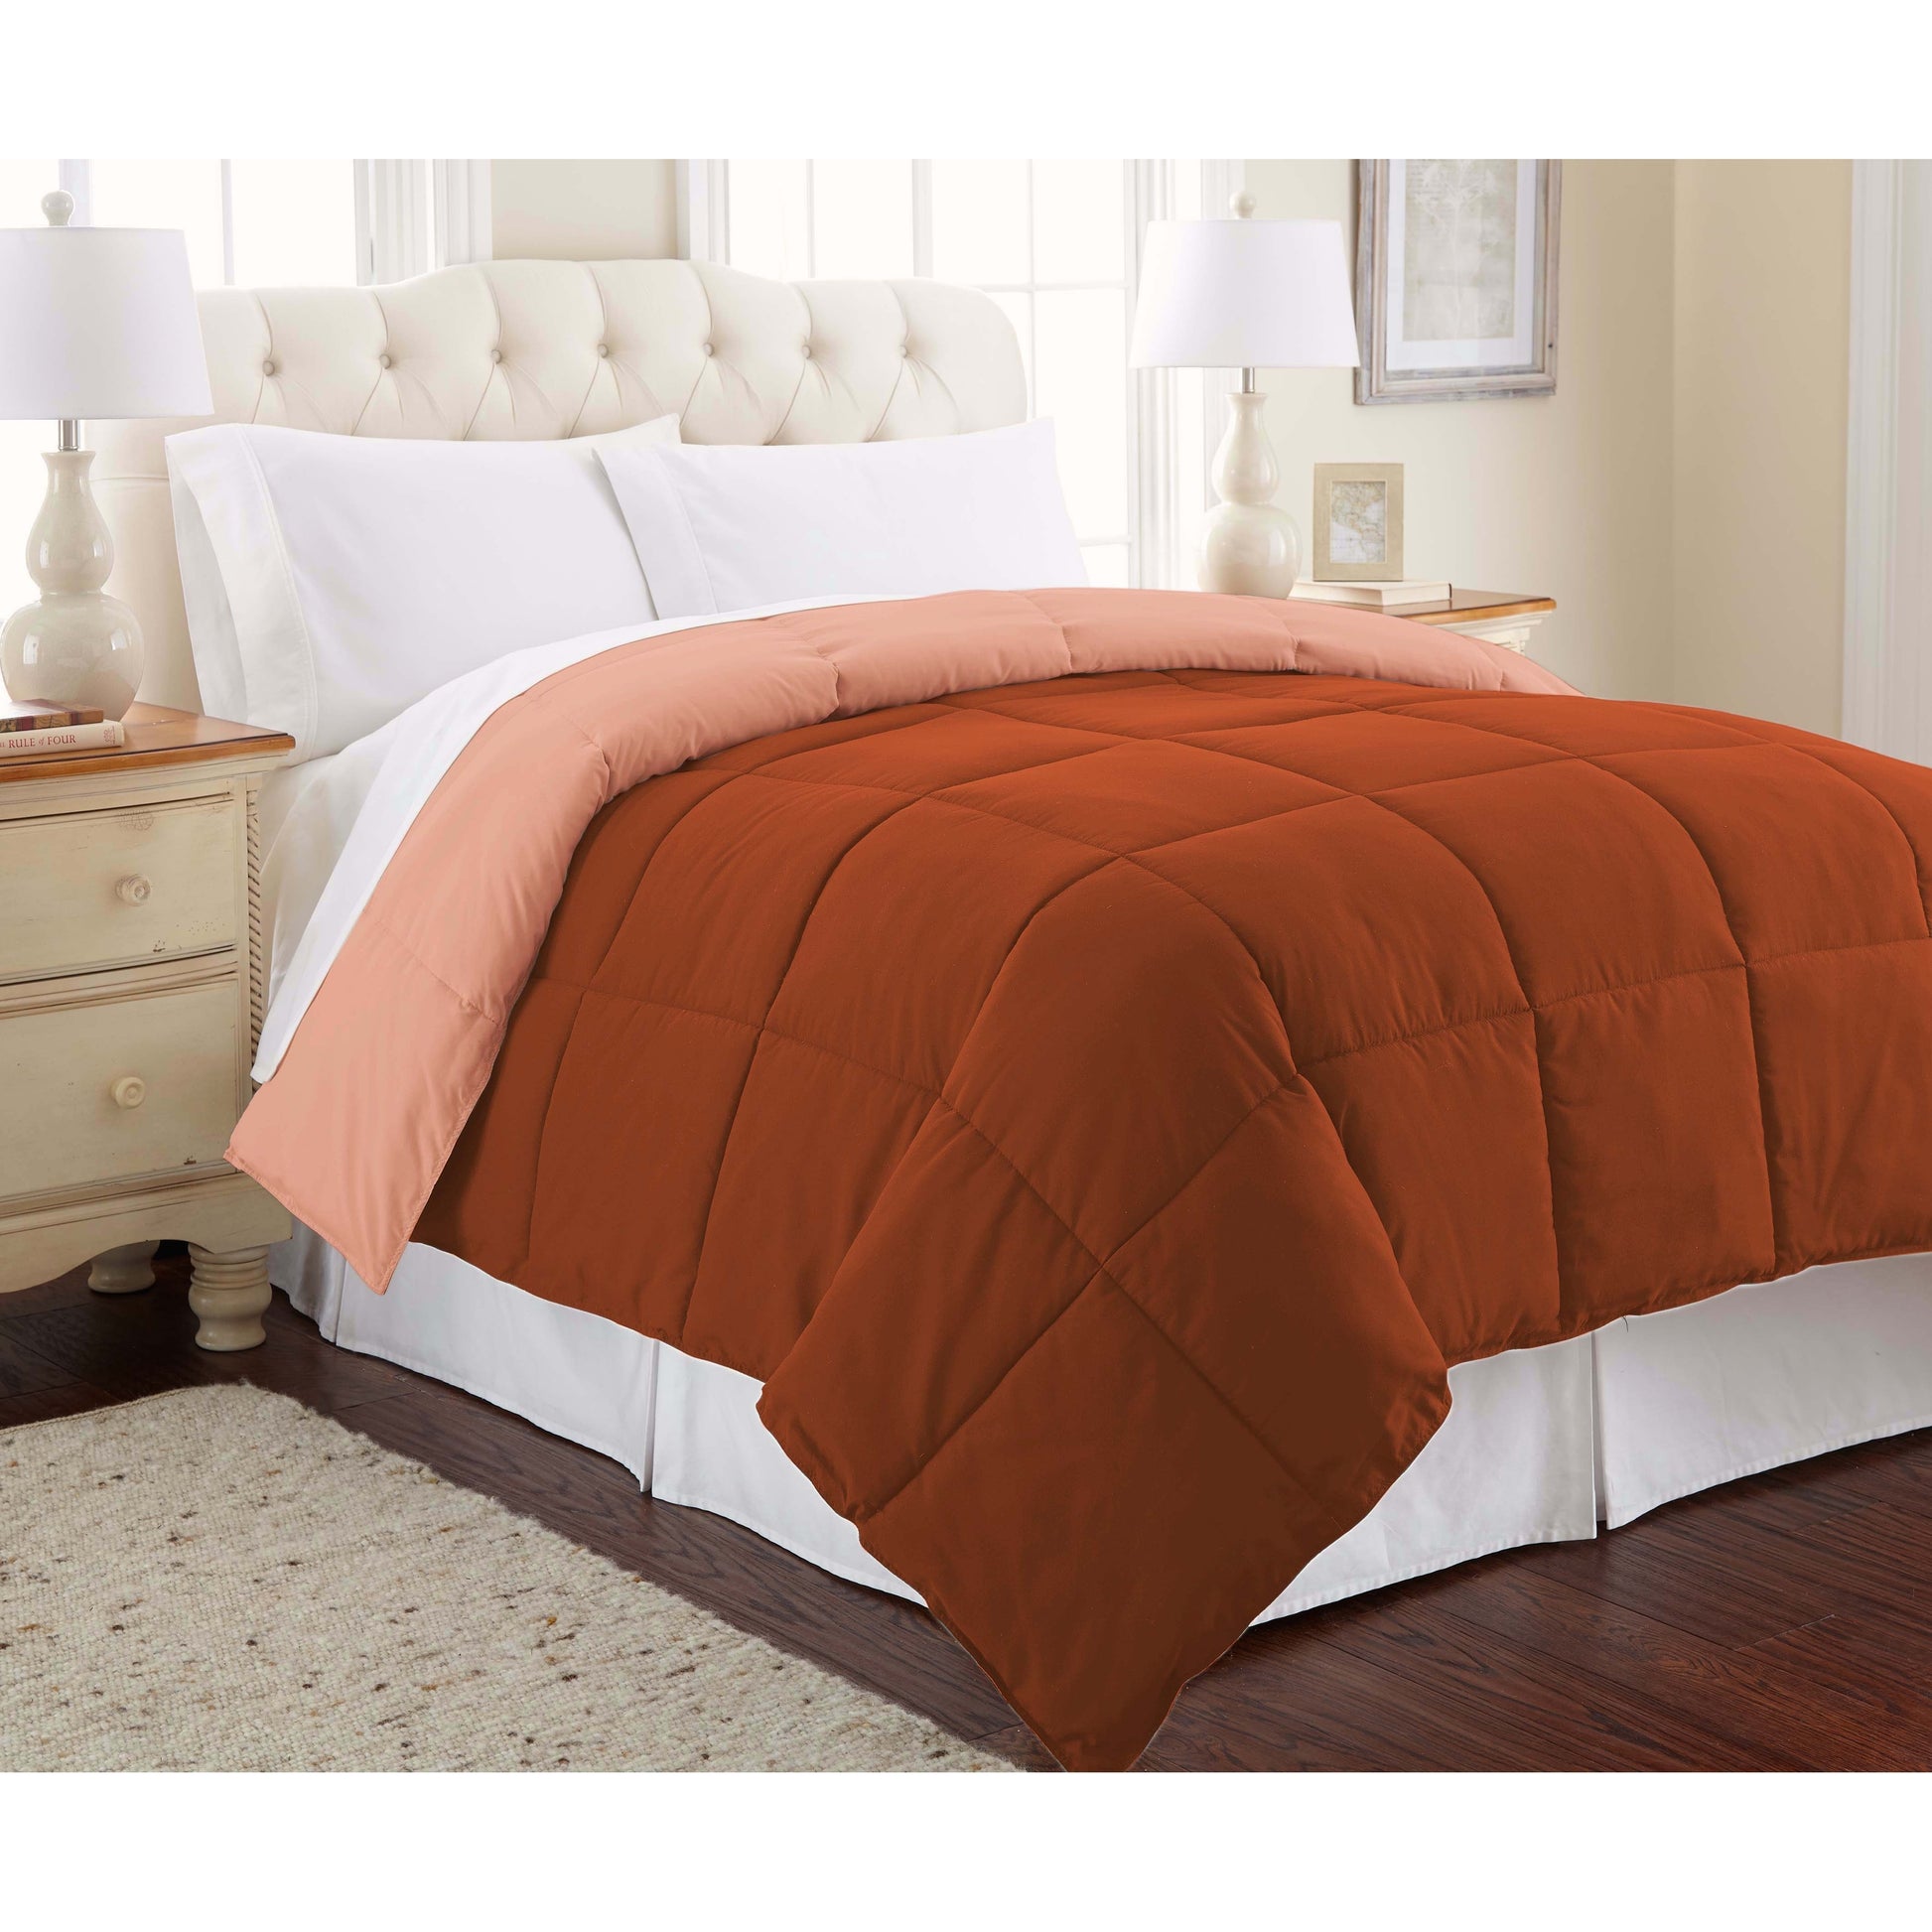 All-Season Reversible down Alternative Comforter